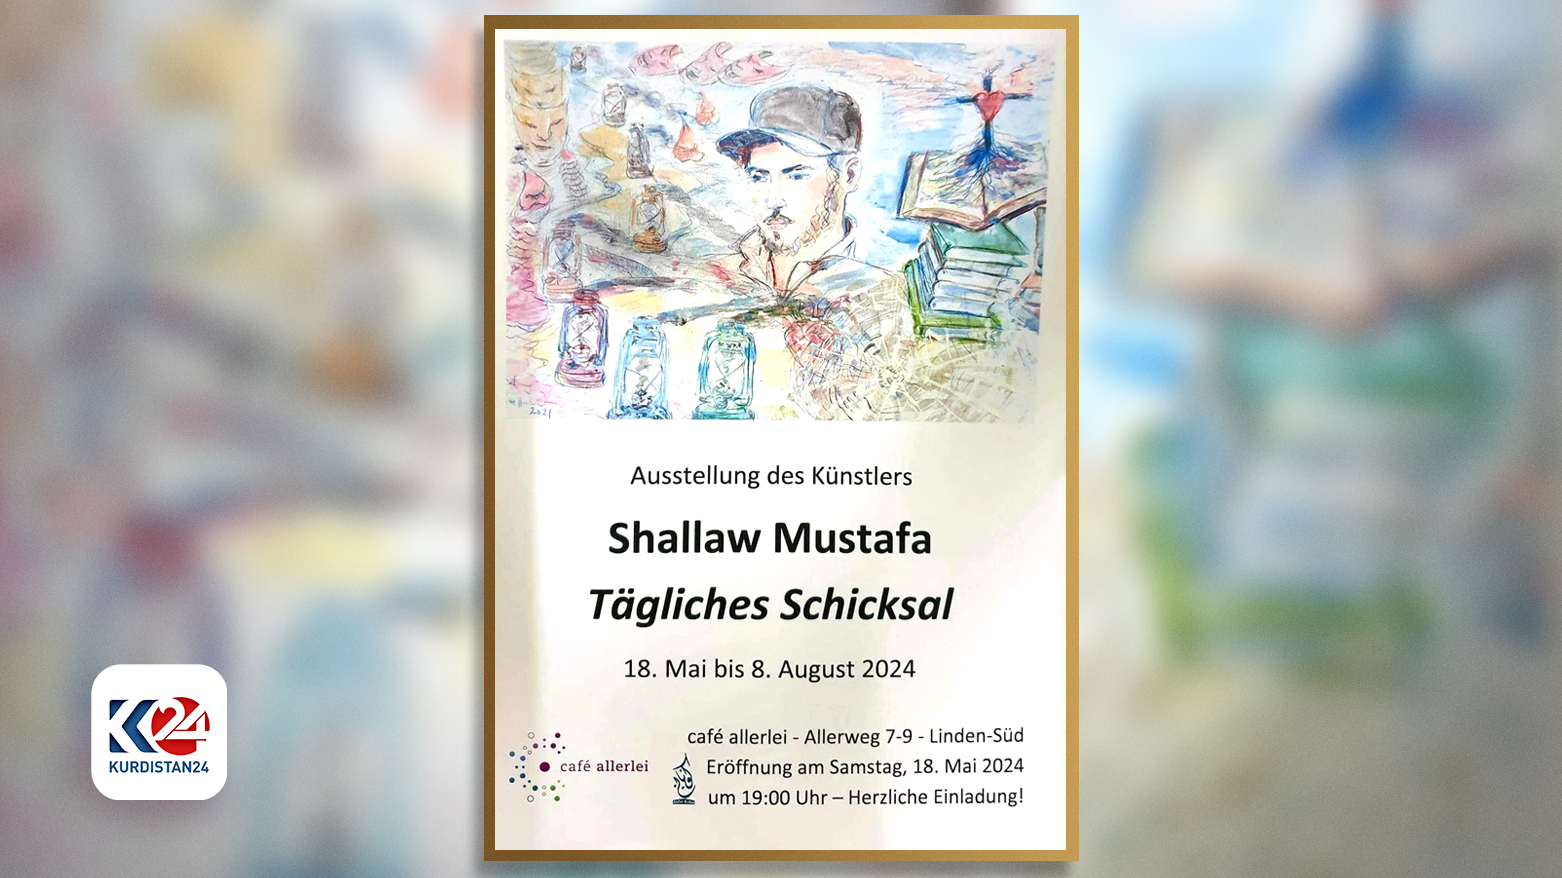 Shallaw Mustafa's Exhibition in Hannover. (Photo: Kurdistan 24)